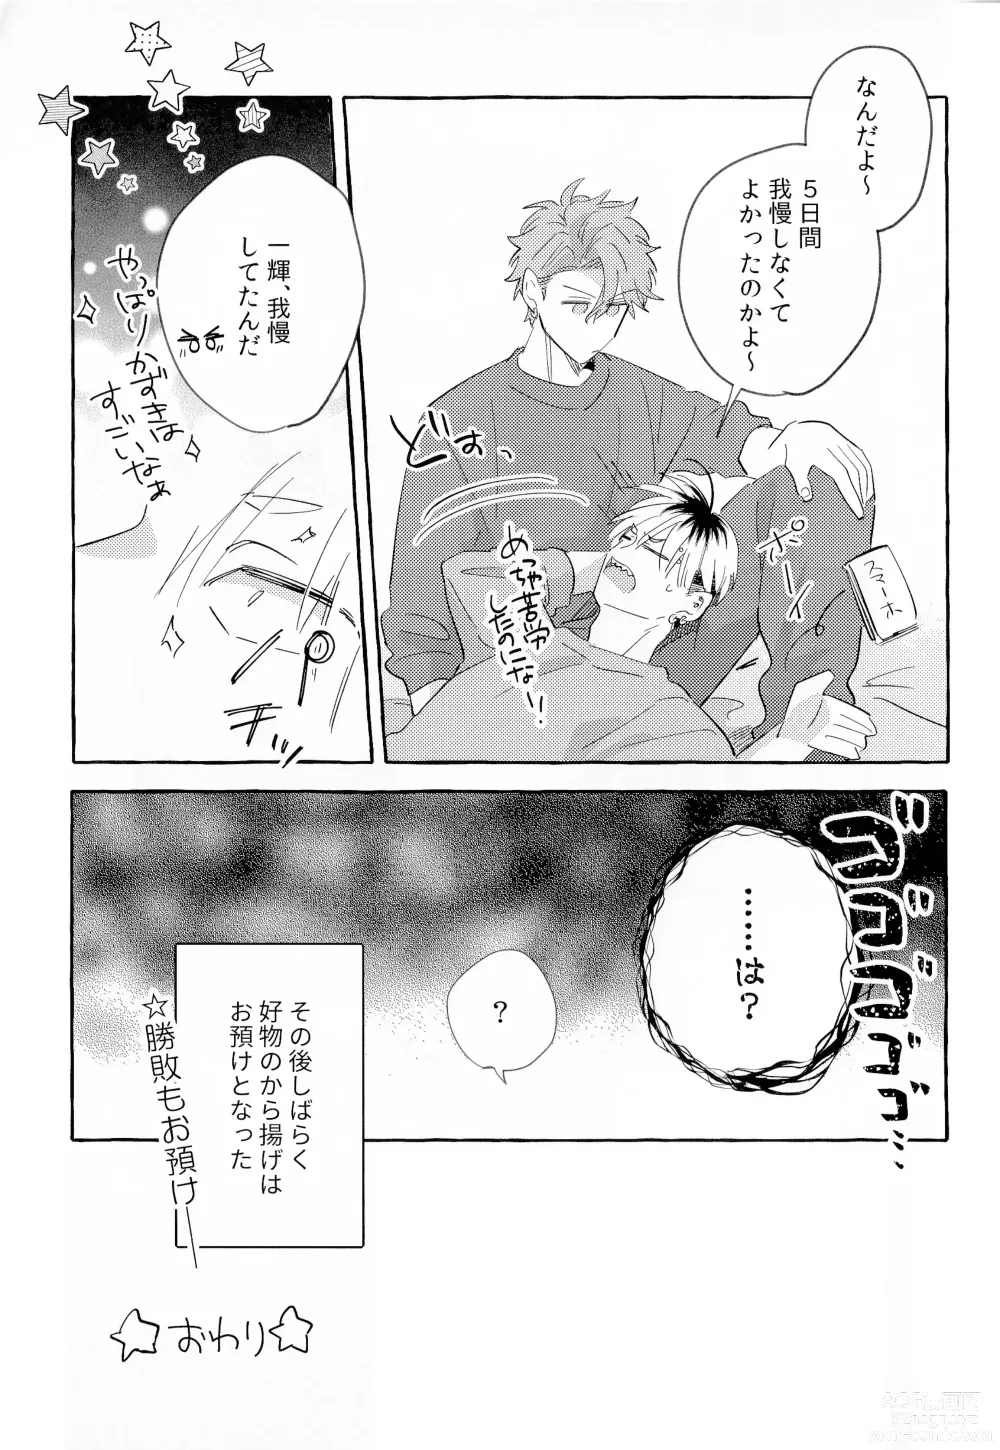 Page 28 of doujinshi skip run!run!run!